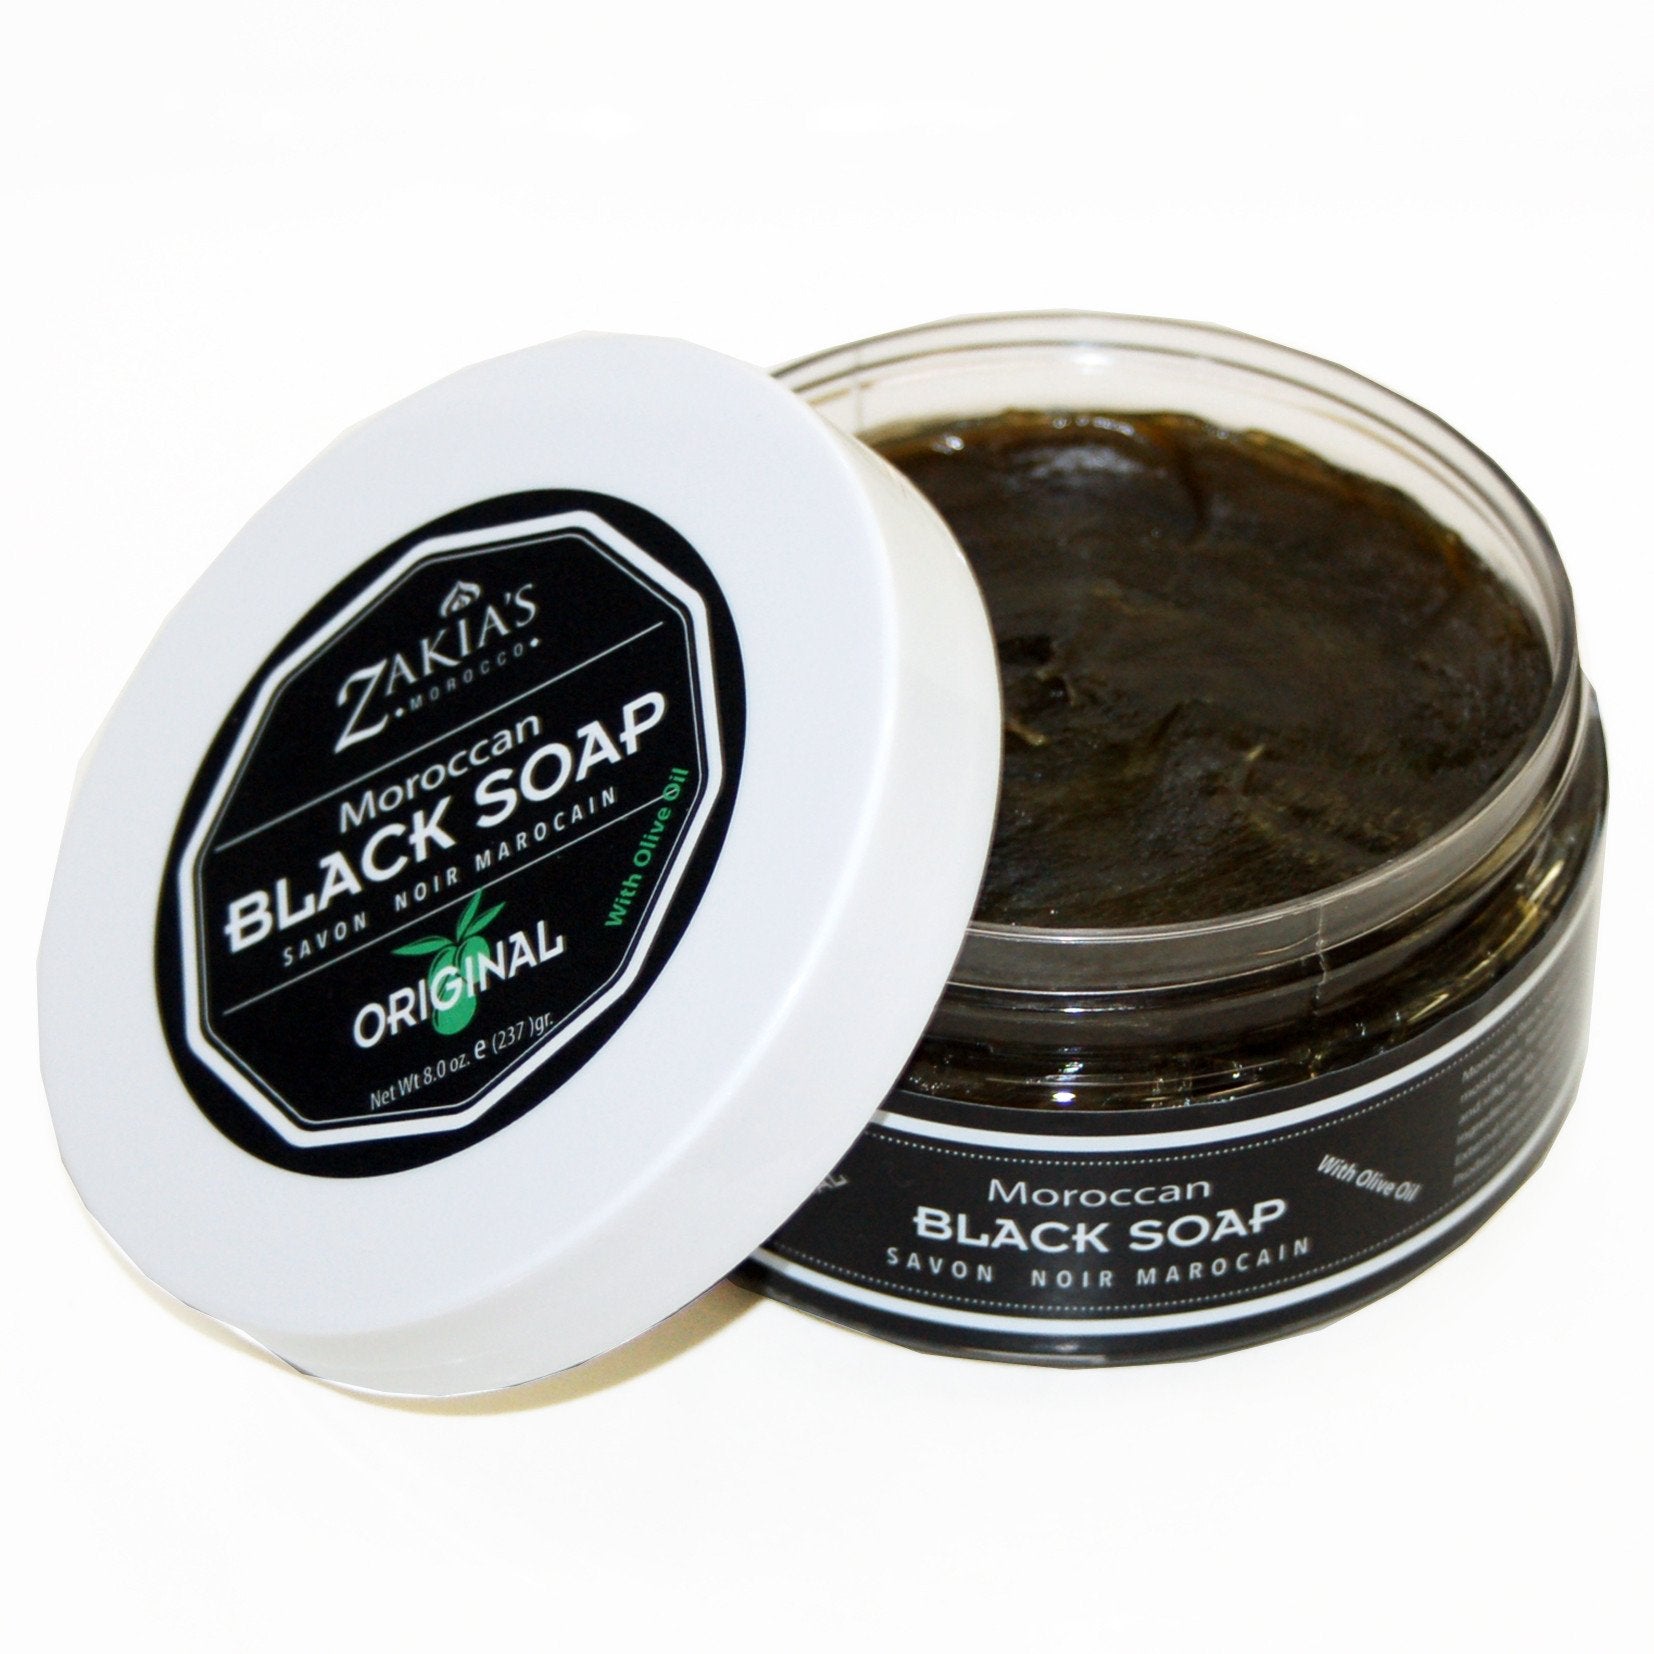 Moroccan Black Soap - Moisturizing Soap - Original Formula